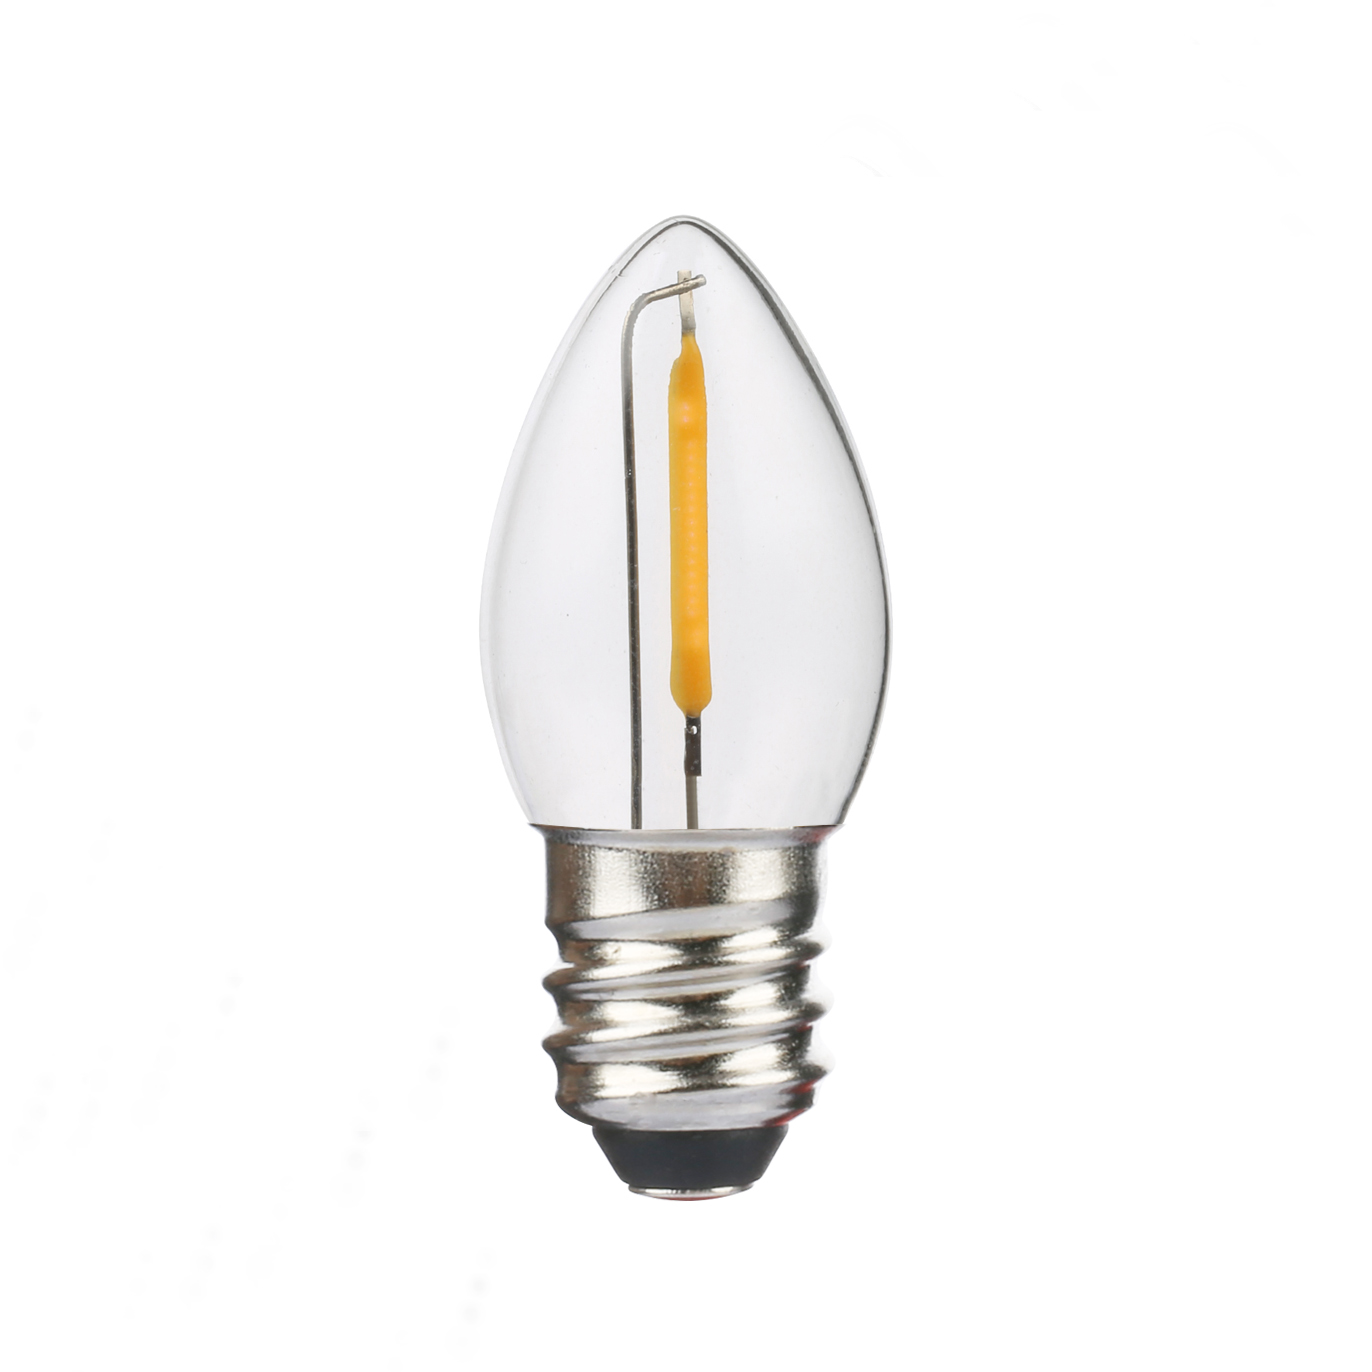 UL listed E12 LED Filament C7 Night Light Bulb